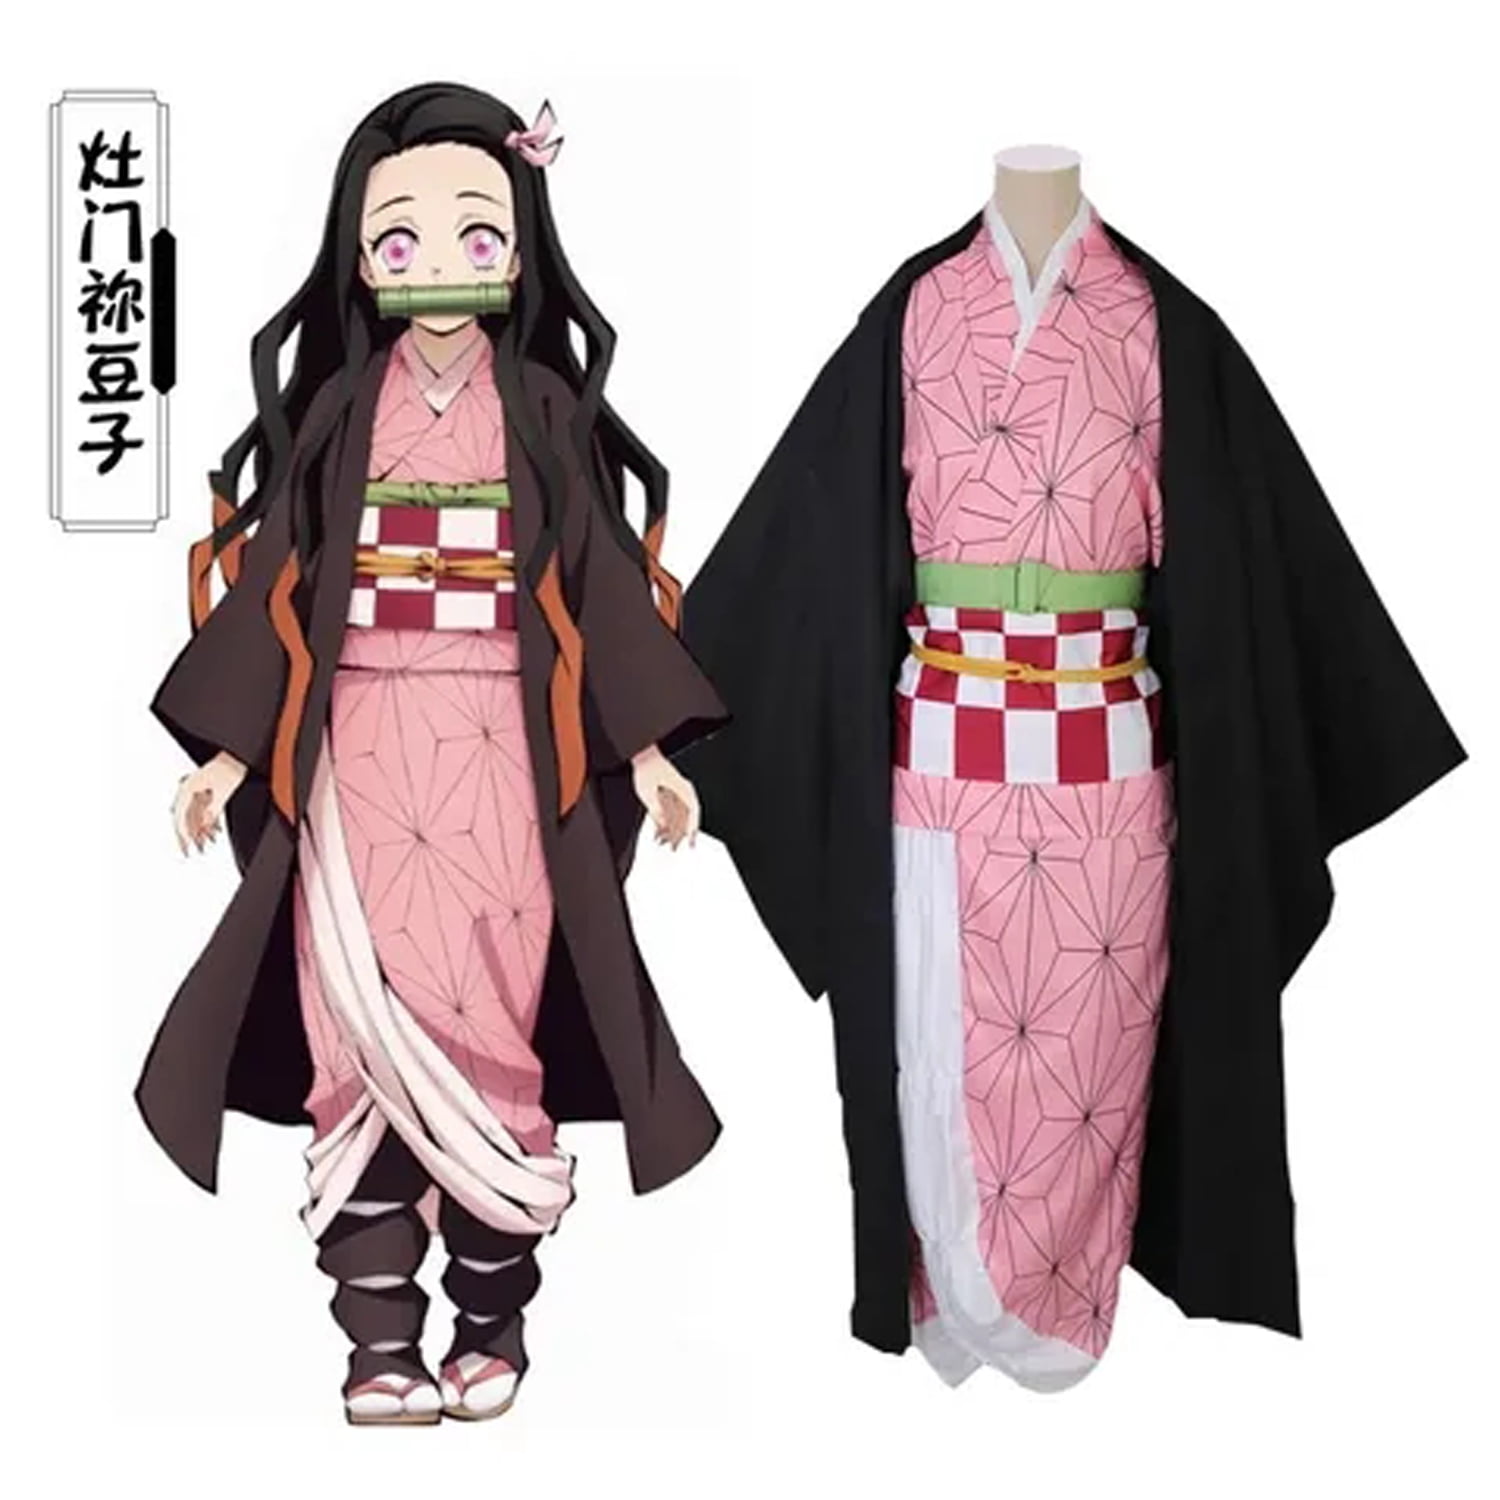 Demon Slayer Kimetsu no Yaiba Kamado Nezuko Cosplay Costume Kimono Set Uniform Halloween Carnival Adult Clothes(S) - Walmart.com